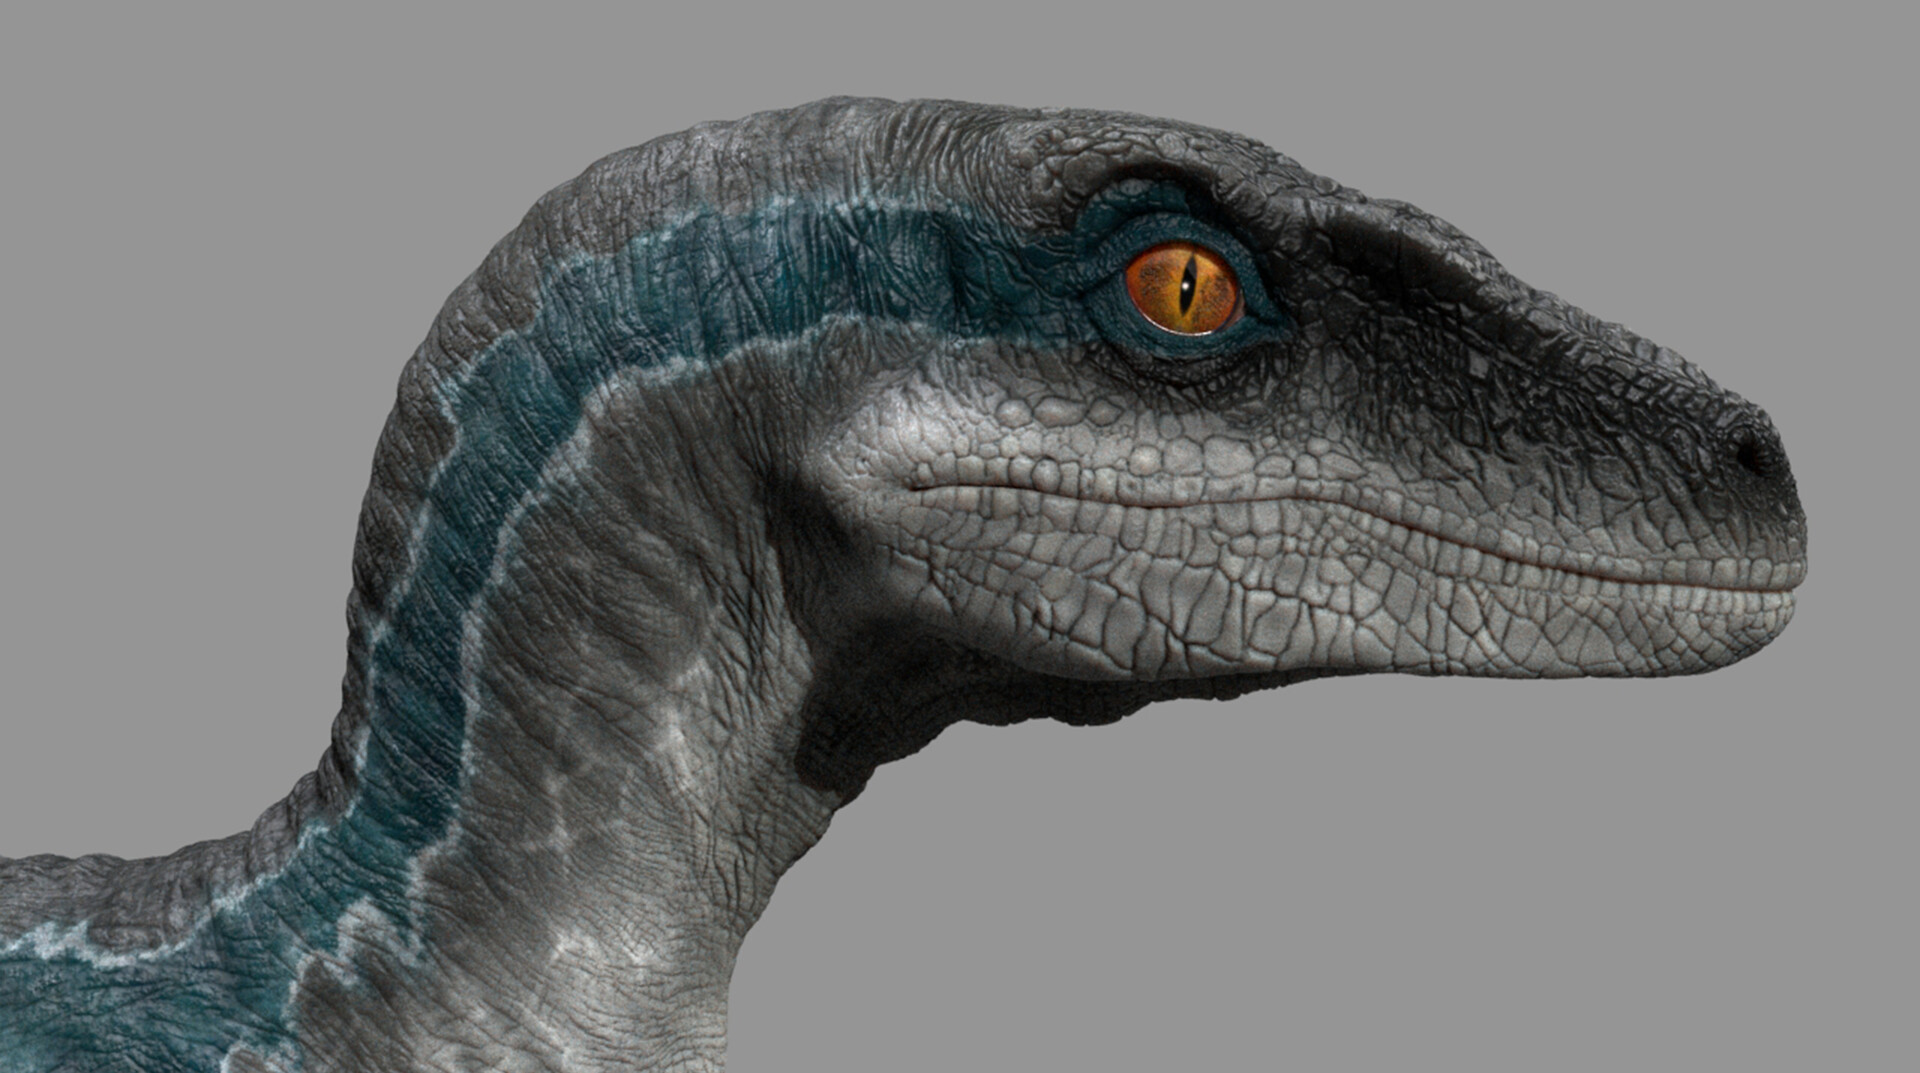 Artstation Jurassic World Camp Cretaceous Dinosaur Rnd Raptor Blue Lorin Z Pillai